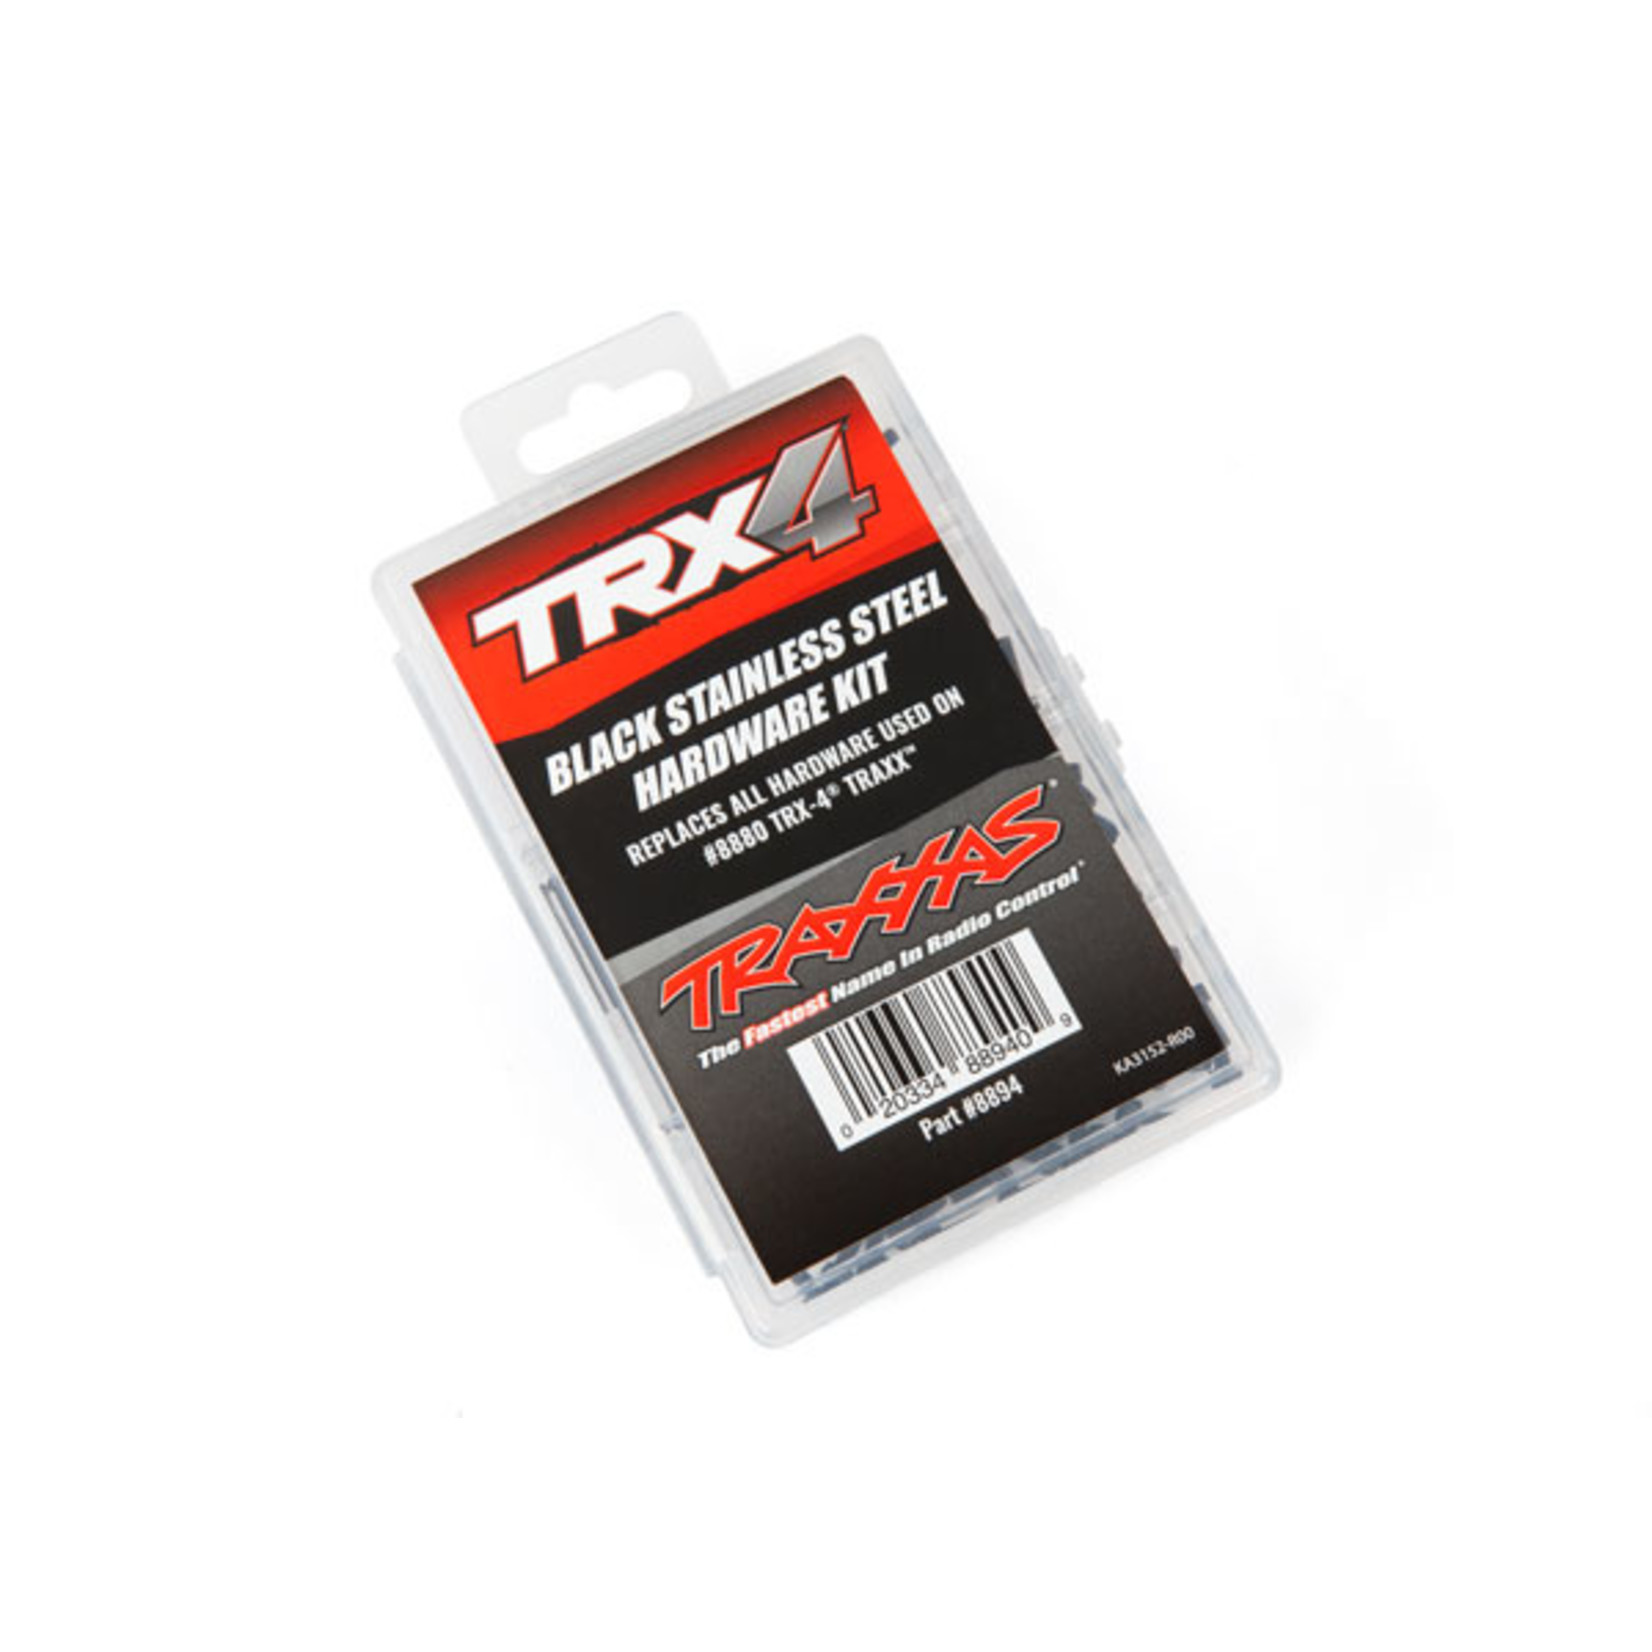 Traxxas 8894 - Hardware kit, black stainless steel, TRX-4